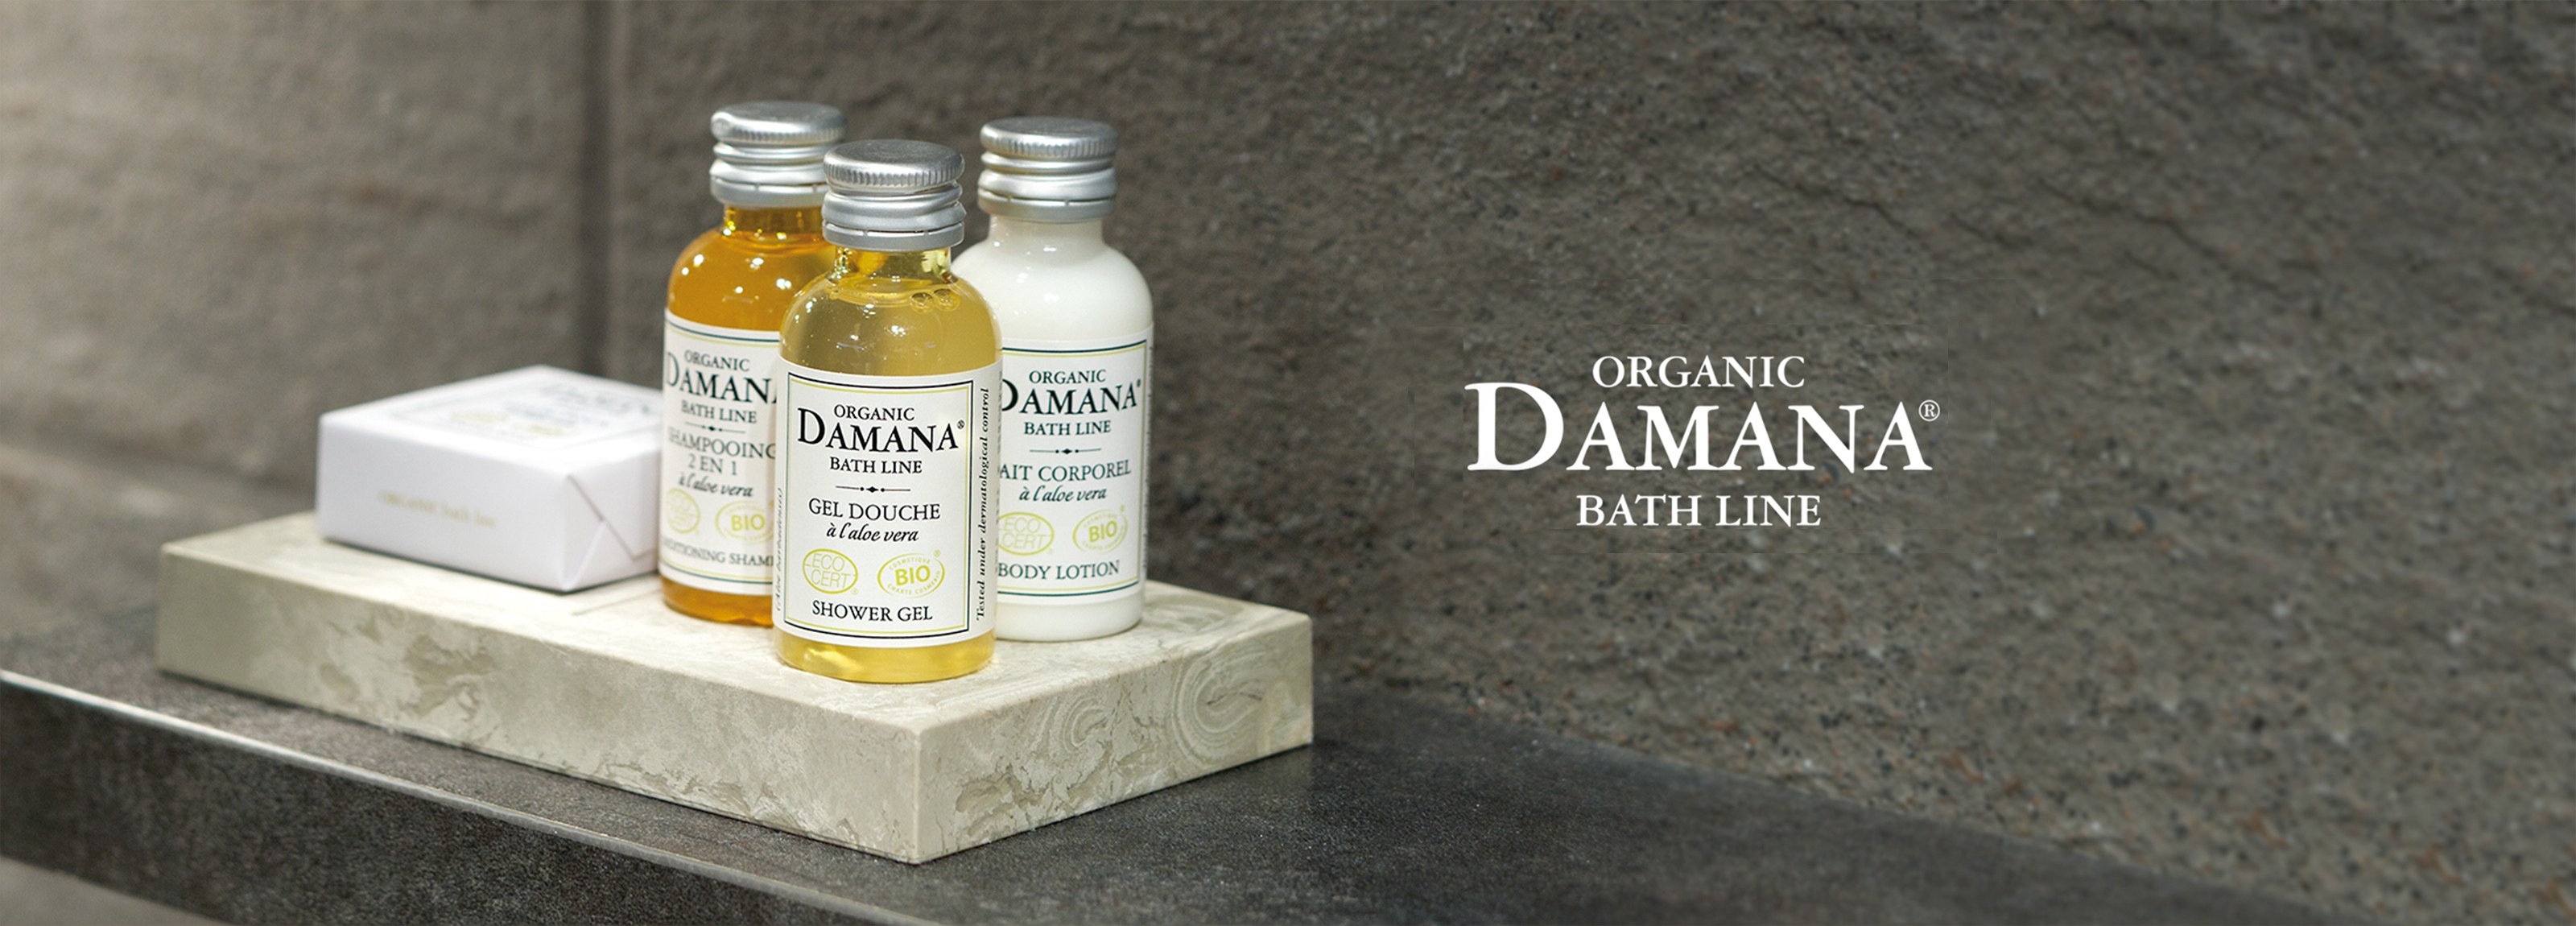 organic damana bath line products in bathroom